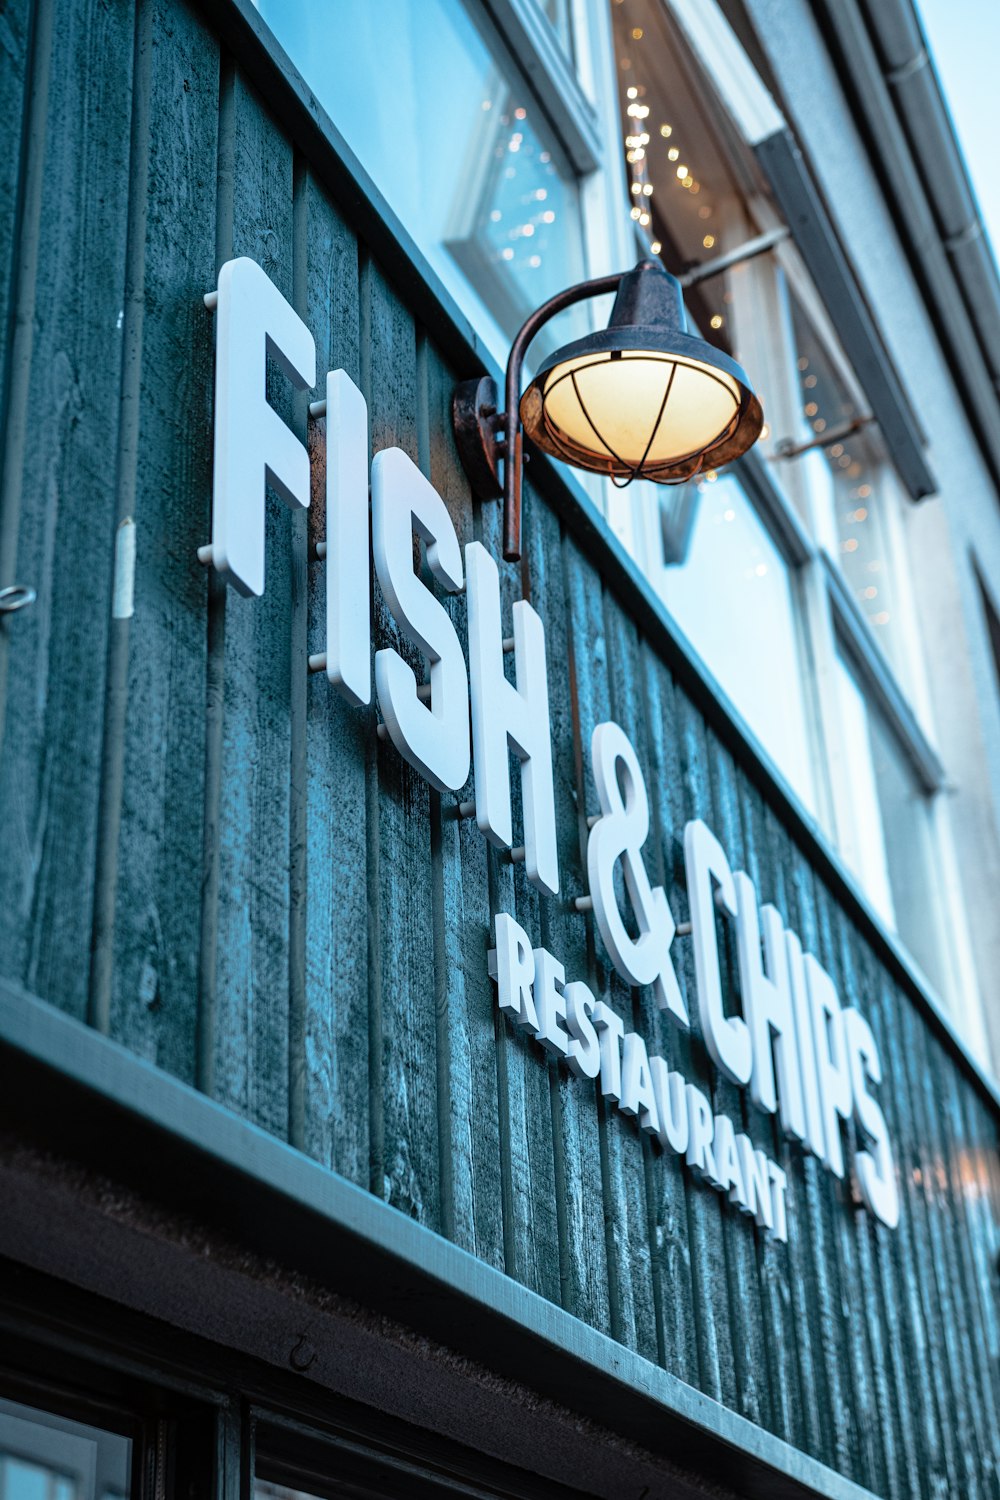 Fish & Chips signage